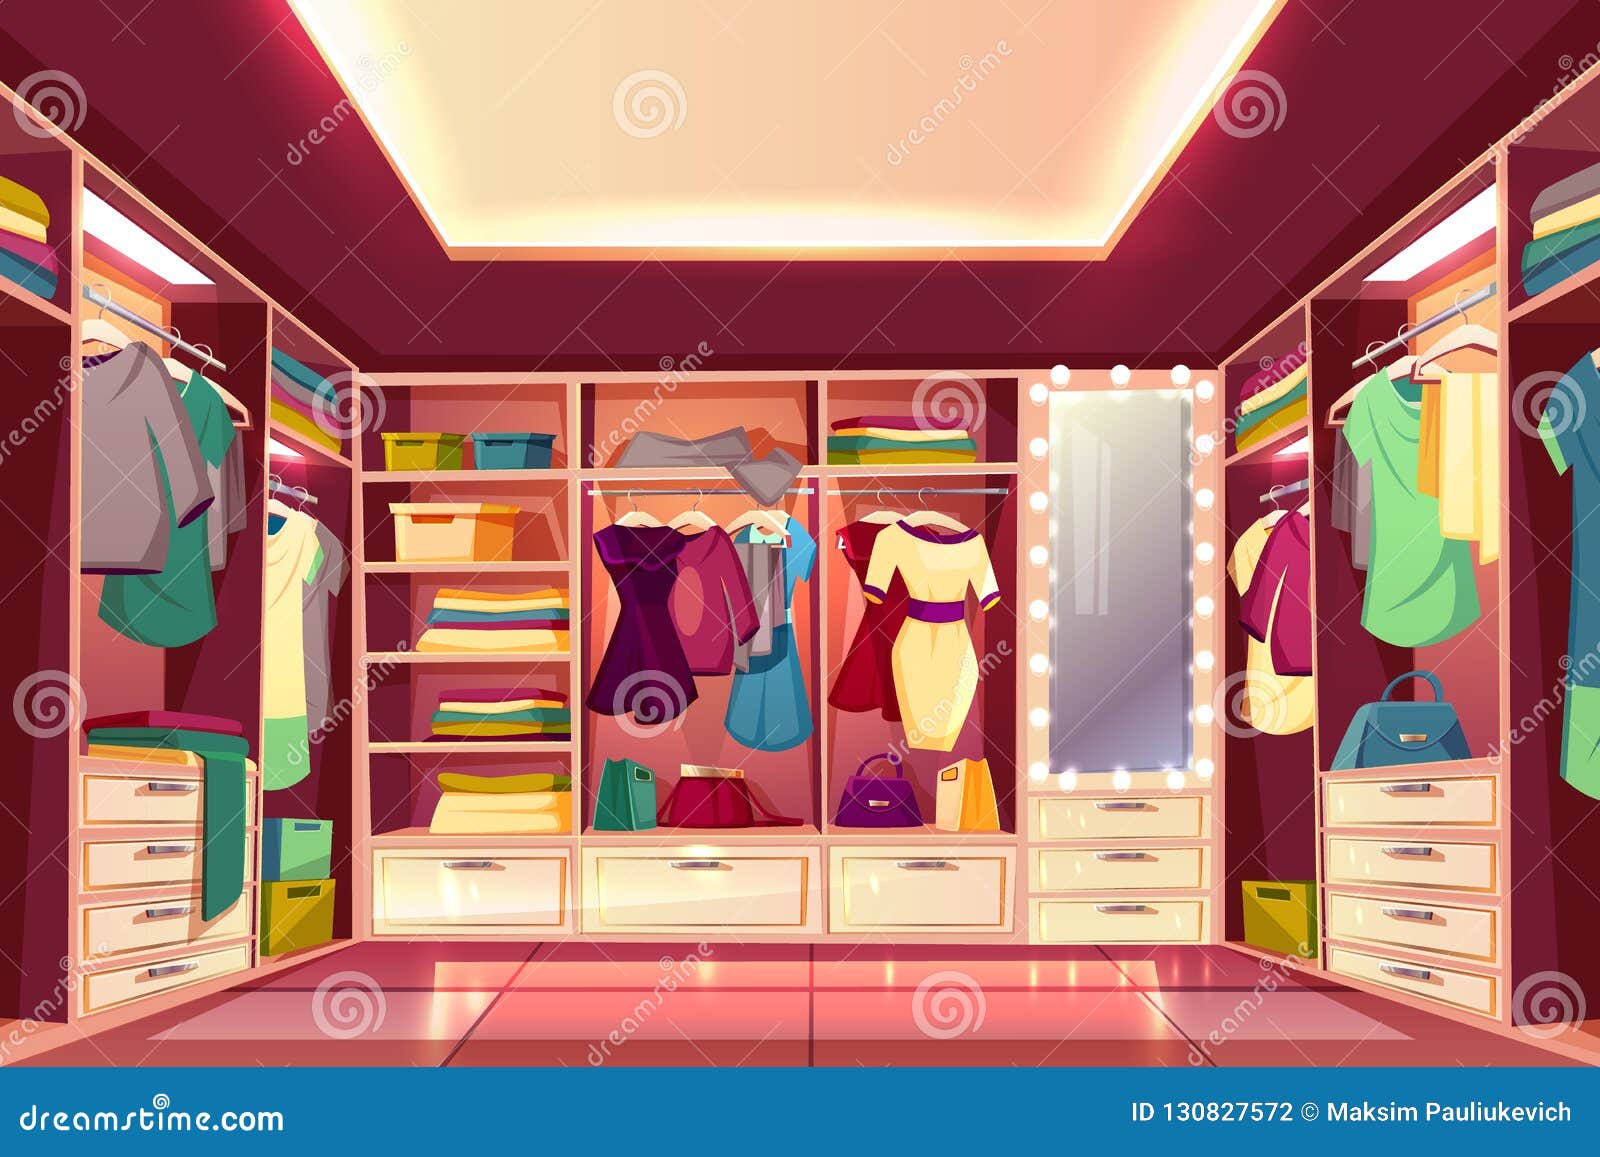 womans walk-in closet interior cartoon 